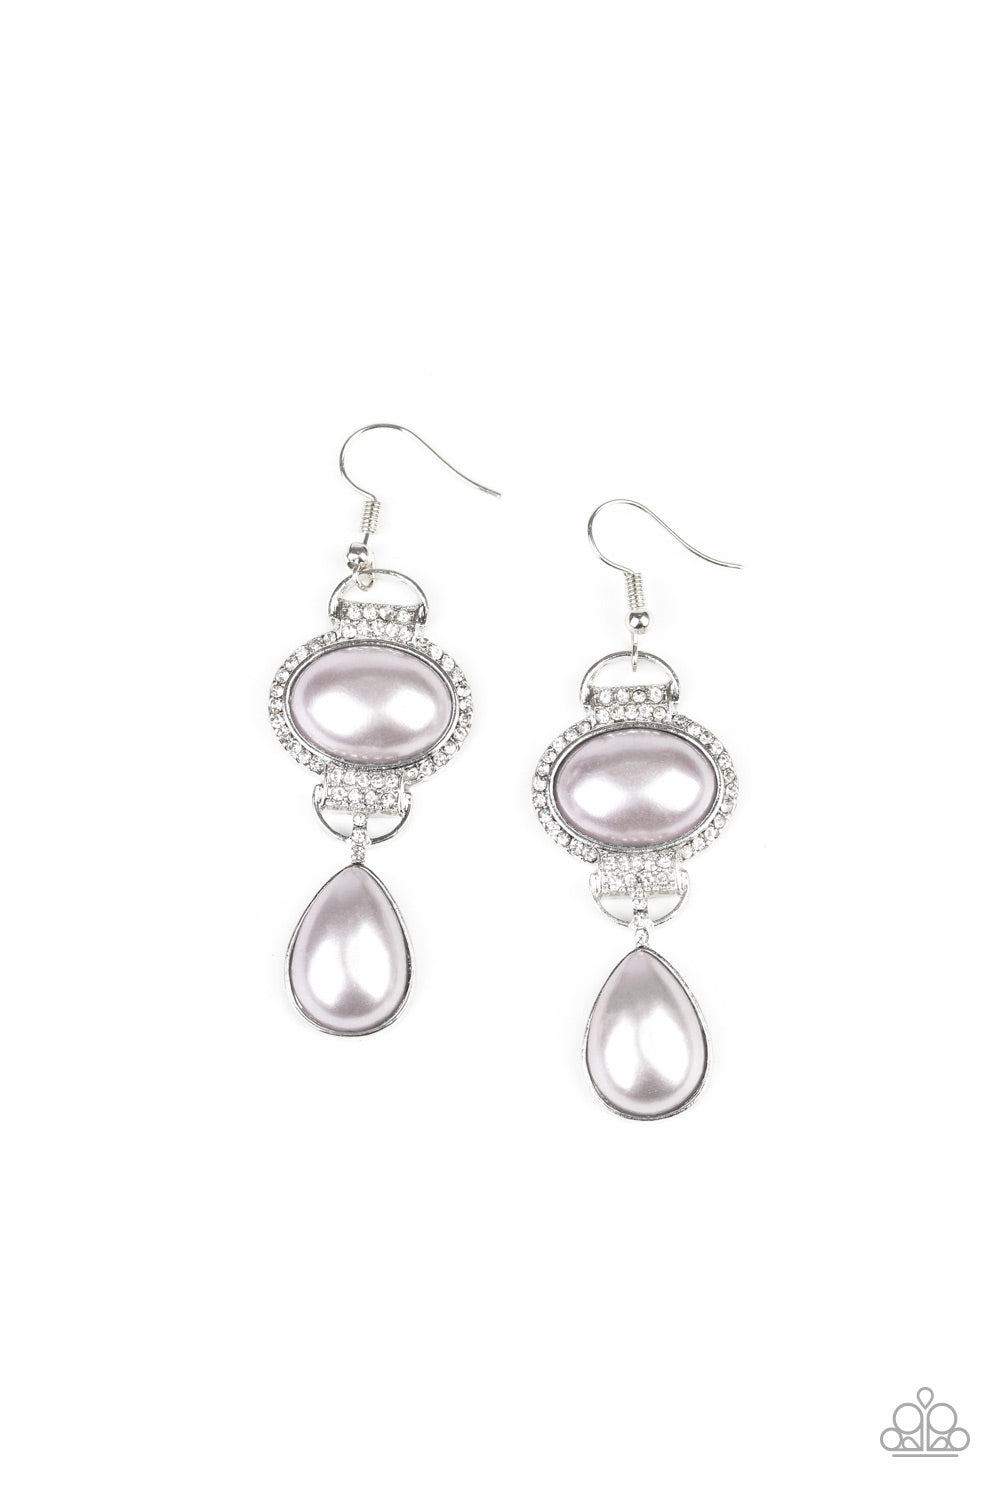 Paparazzi Icy Shimmer - Silver - Gray Teardrop Bead - White Rhinestones - Earrings - $5 Jewelry with Ashley Swint